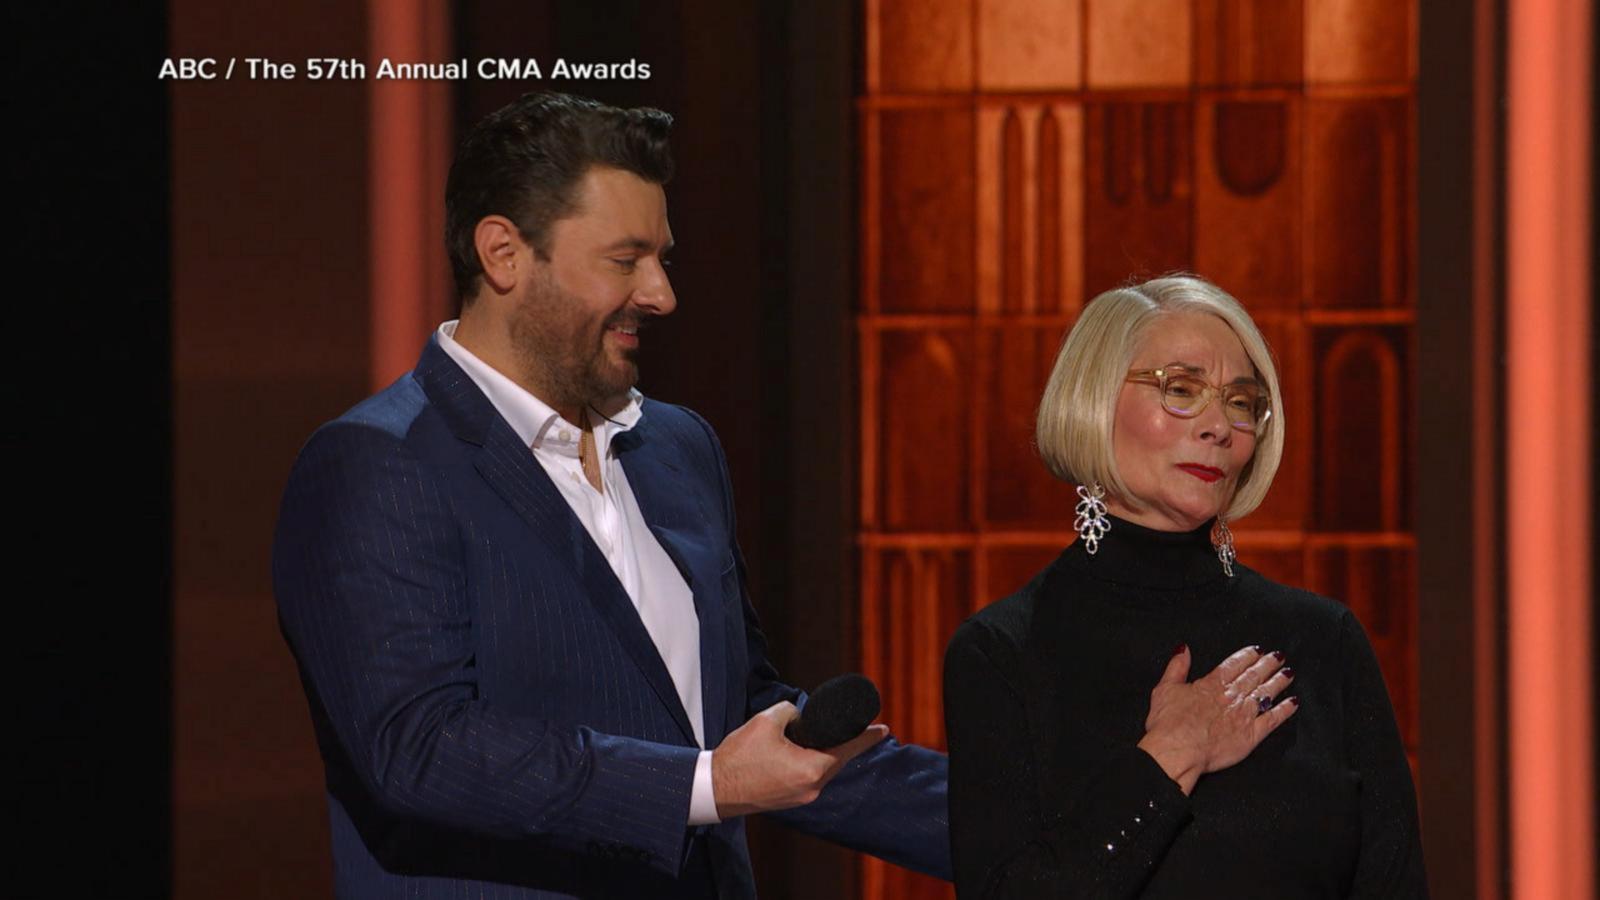 VIDEO: CMA Awards honor music teachers